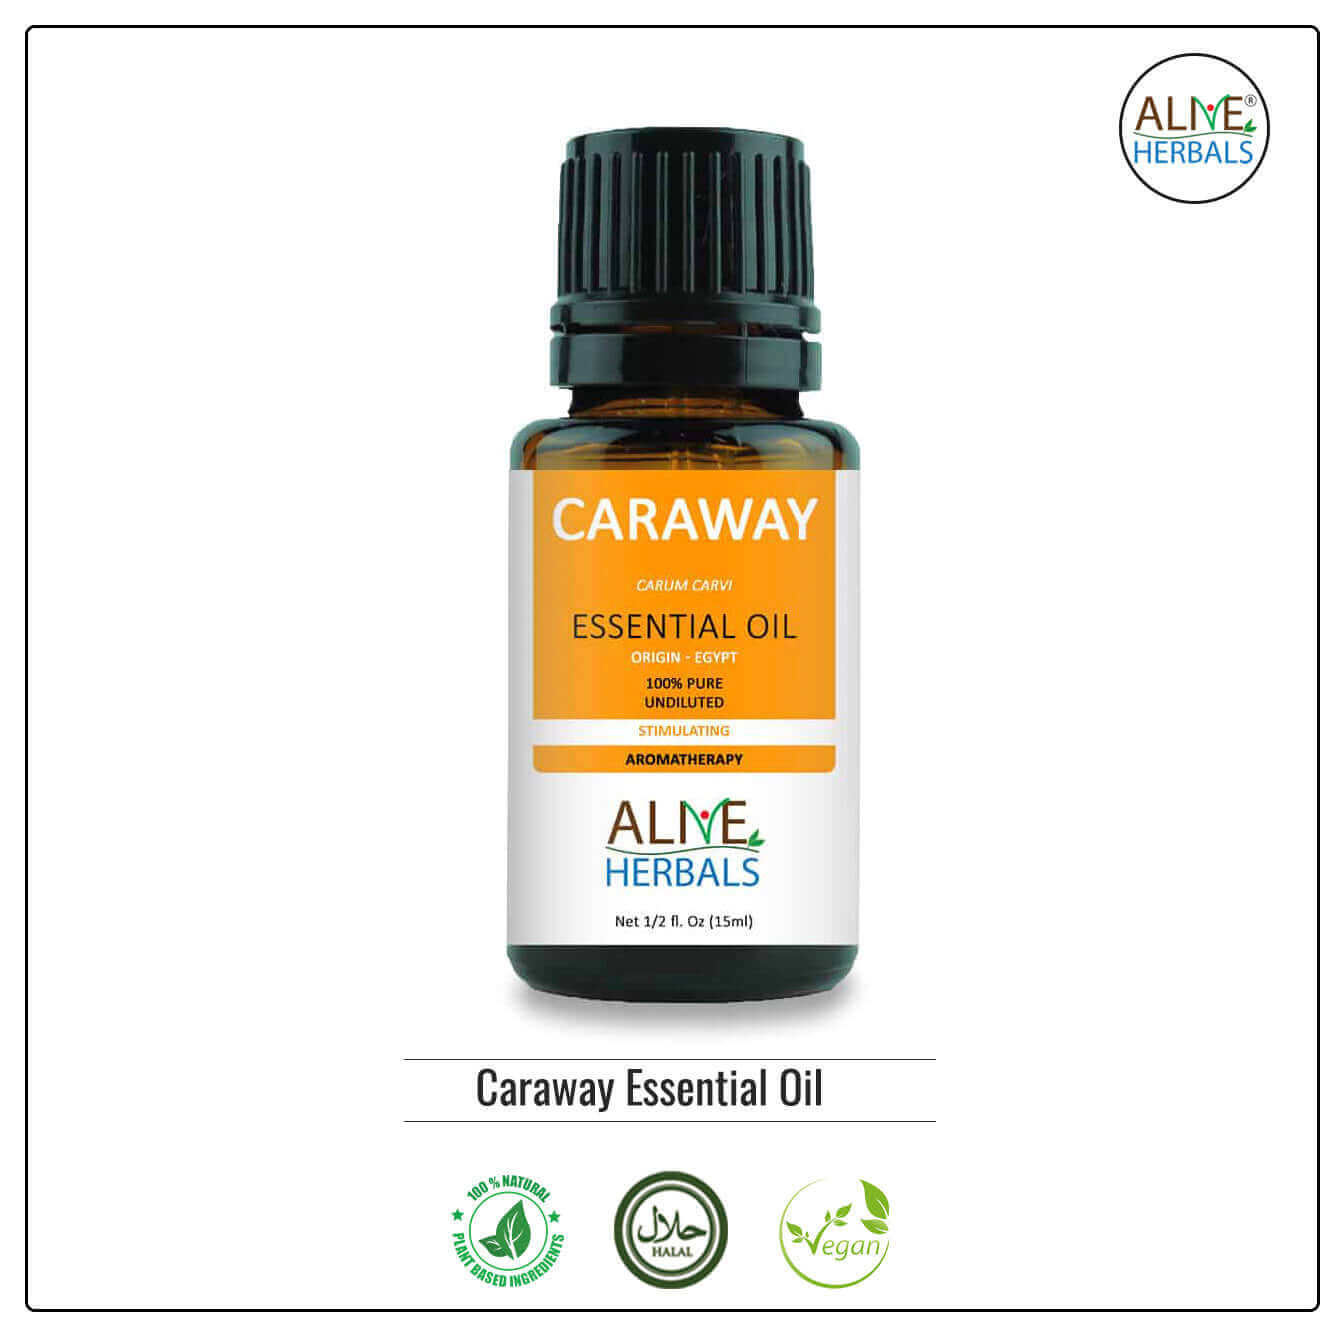 Caraway Essential Oil - Buy at Natural Food Store | Alive Herbals.